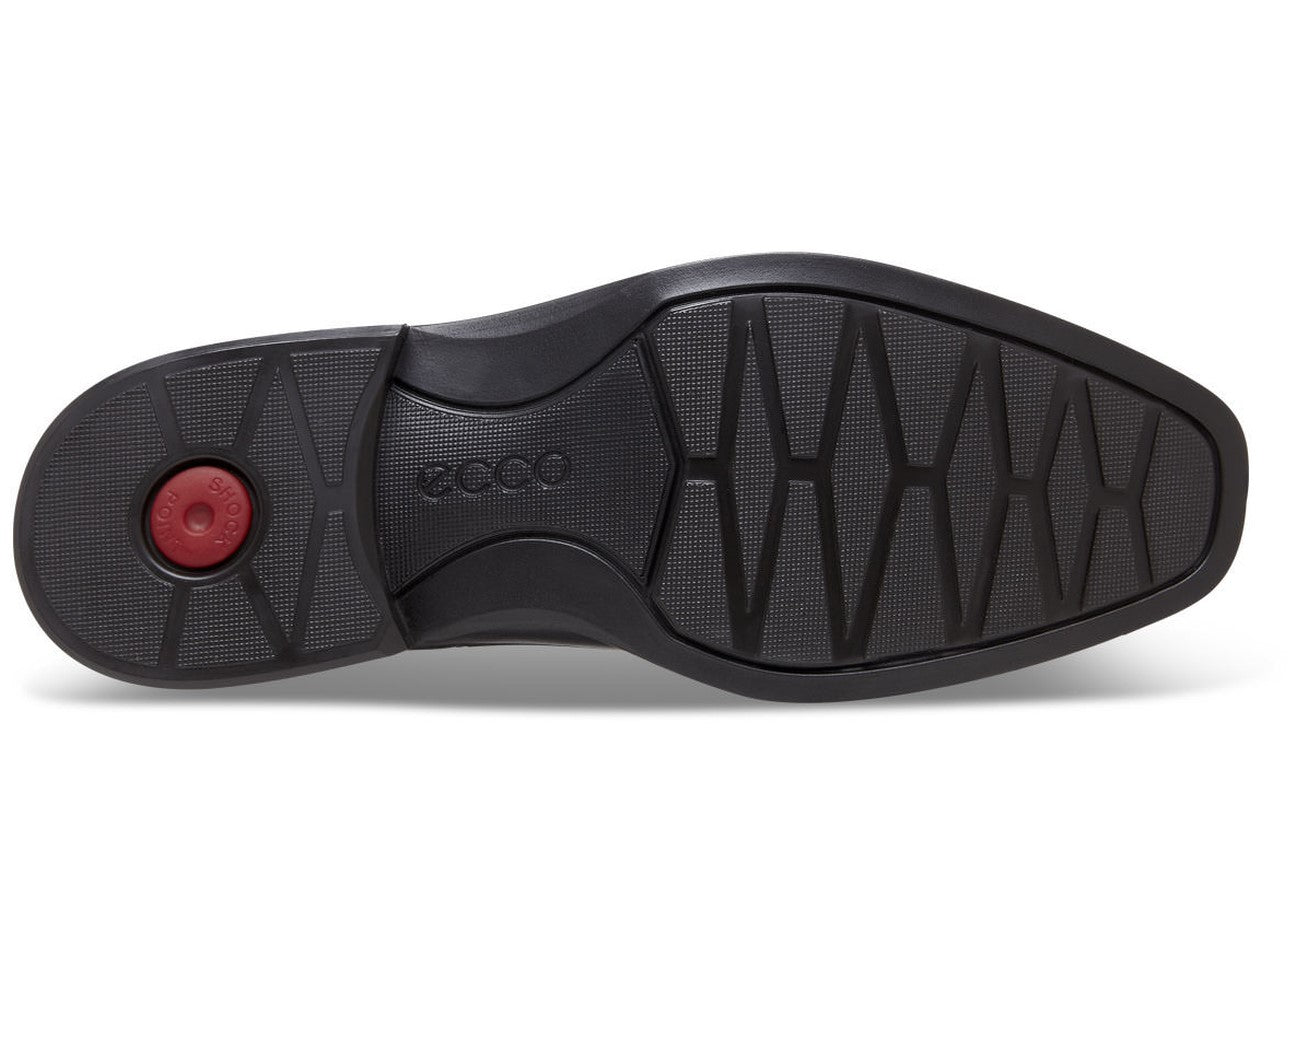 ECCO Men's 623024 Illinois Black Leather Comfort Slip On Walking Shoe